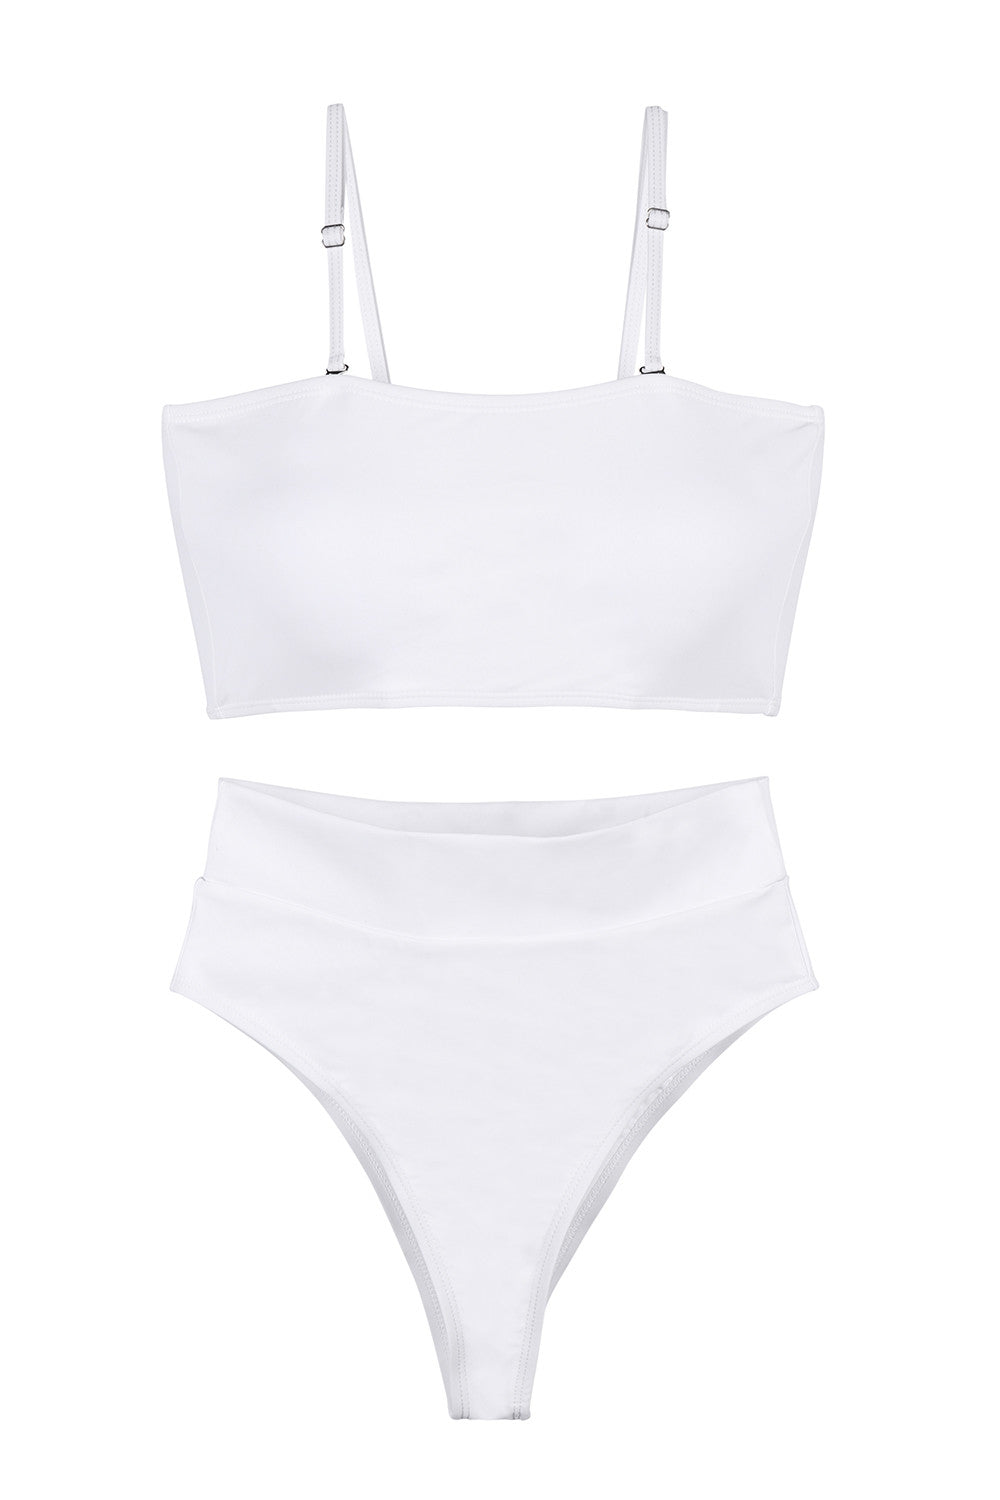 Sexy Bandeau High Waisted Bikini Bottoms Set Two Piece Swimsuits White